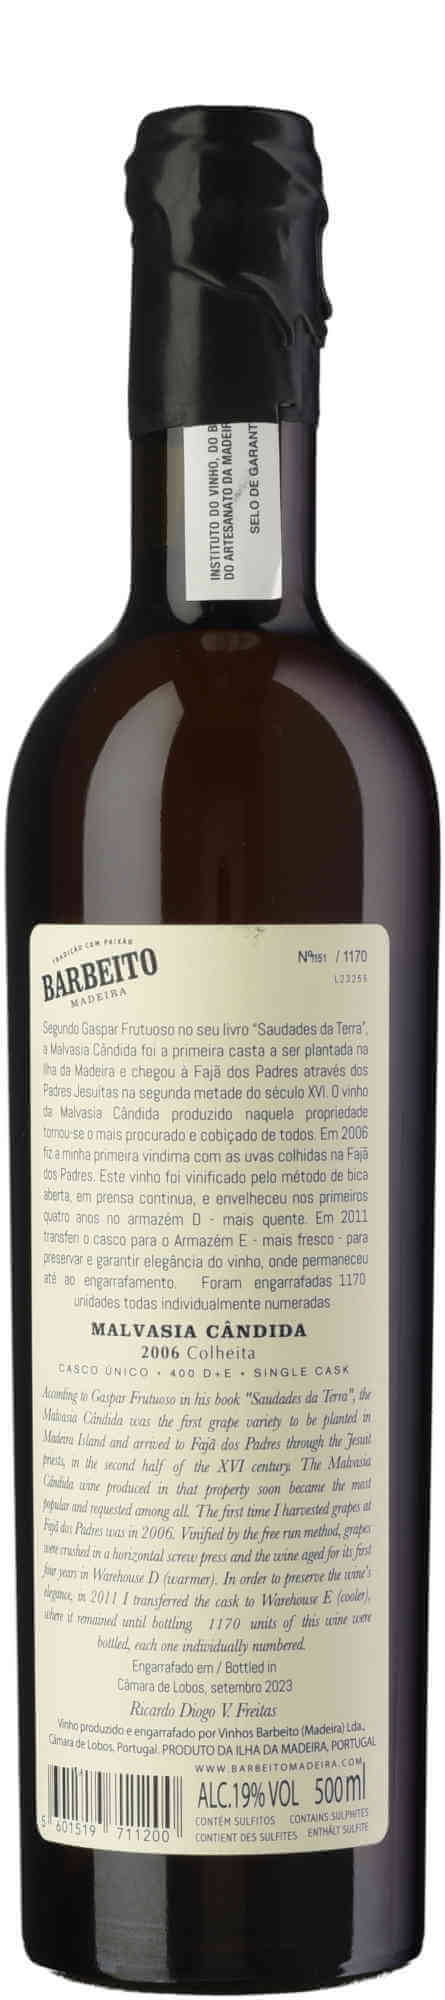 Barbeito-Malvasia-Candida-2006-back